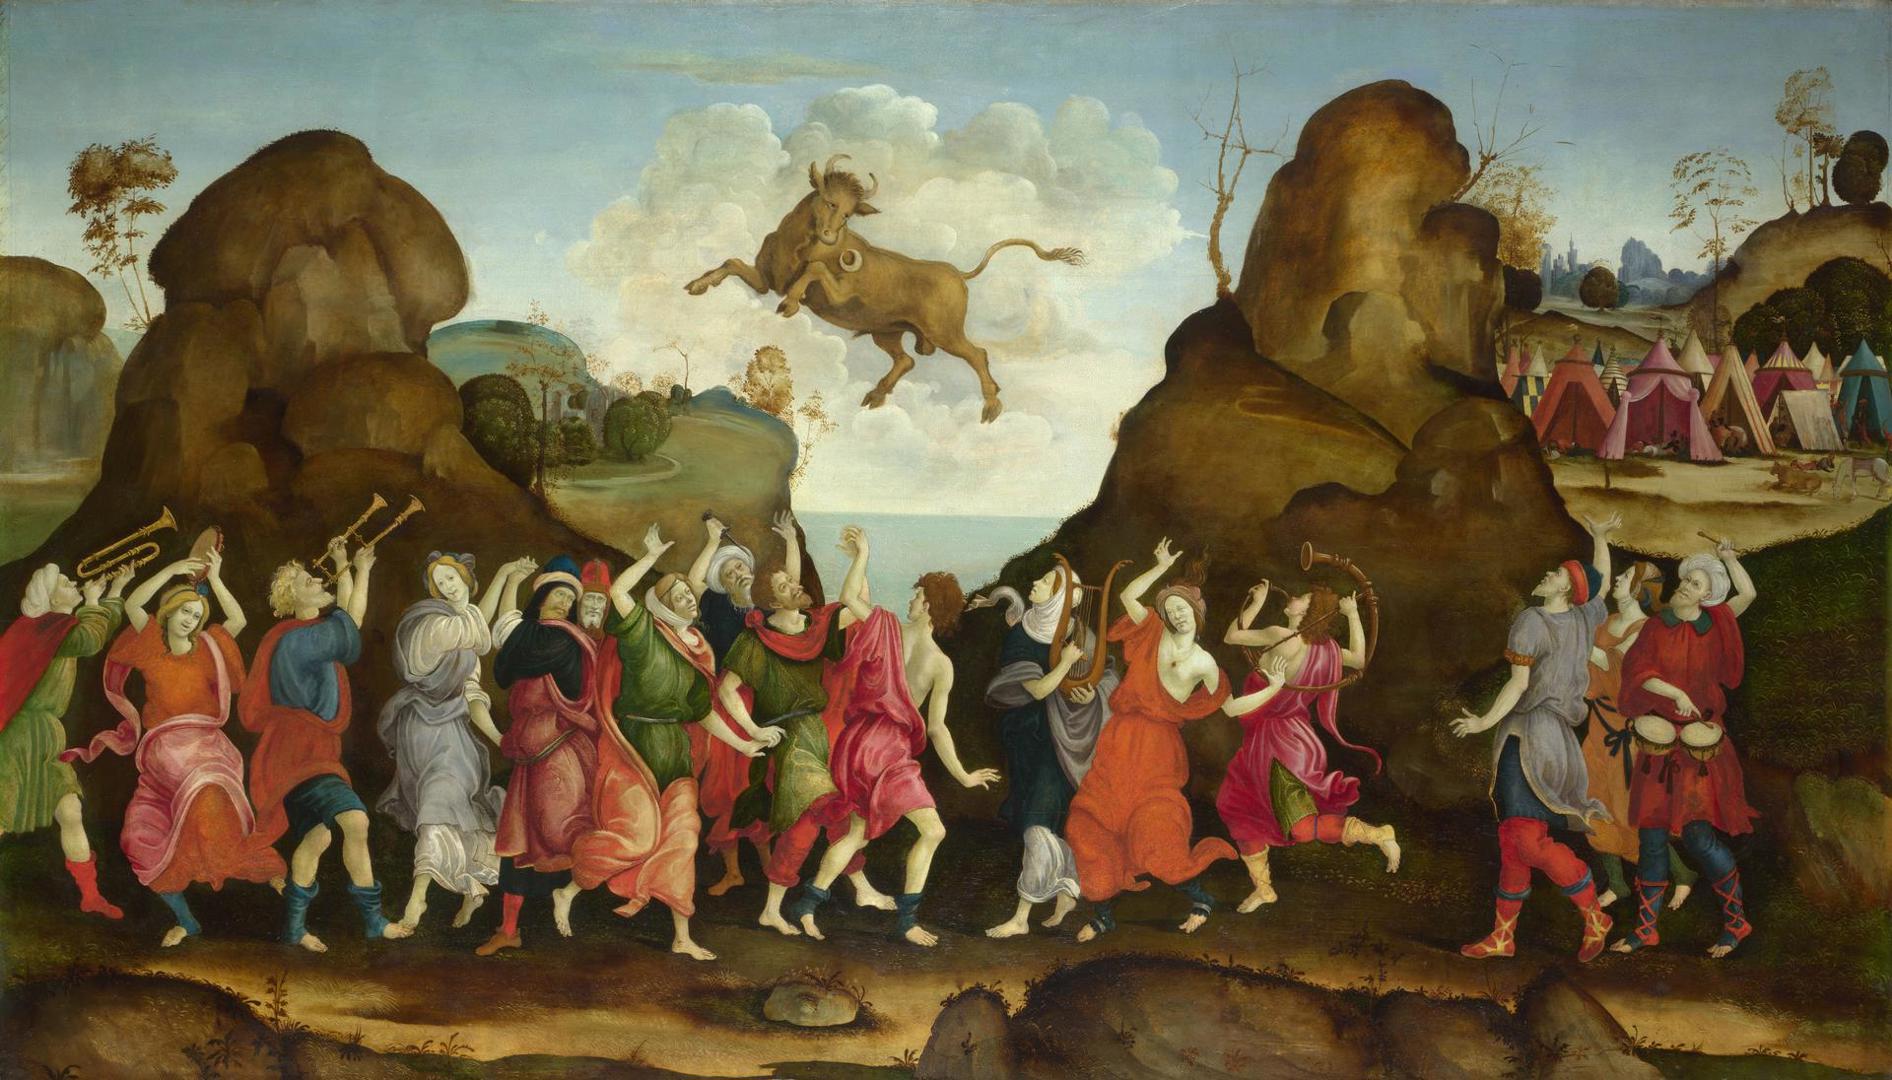 The Worship of the Egyptian Bull God, Apis by Follower of Filippino Lippi